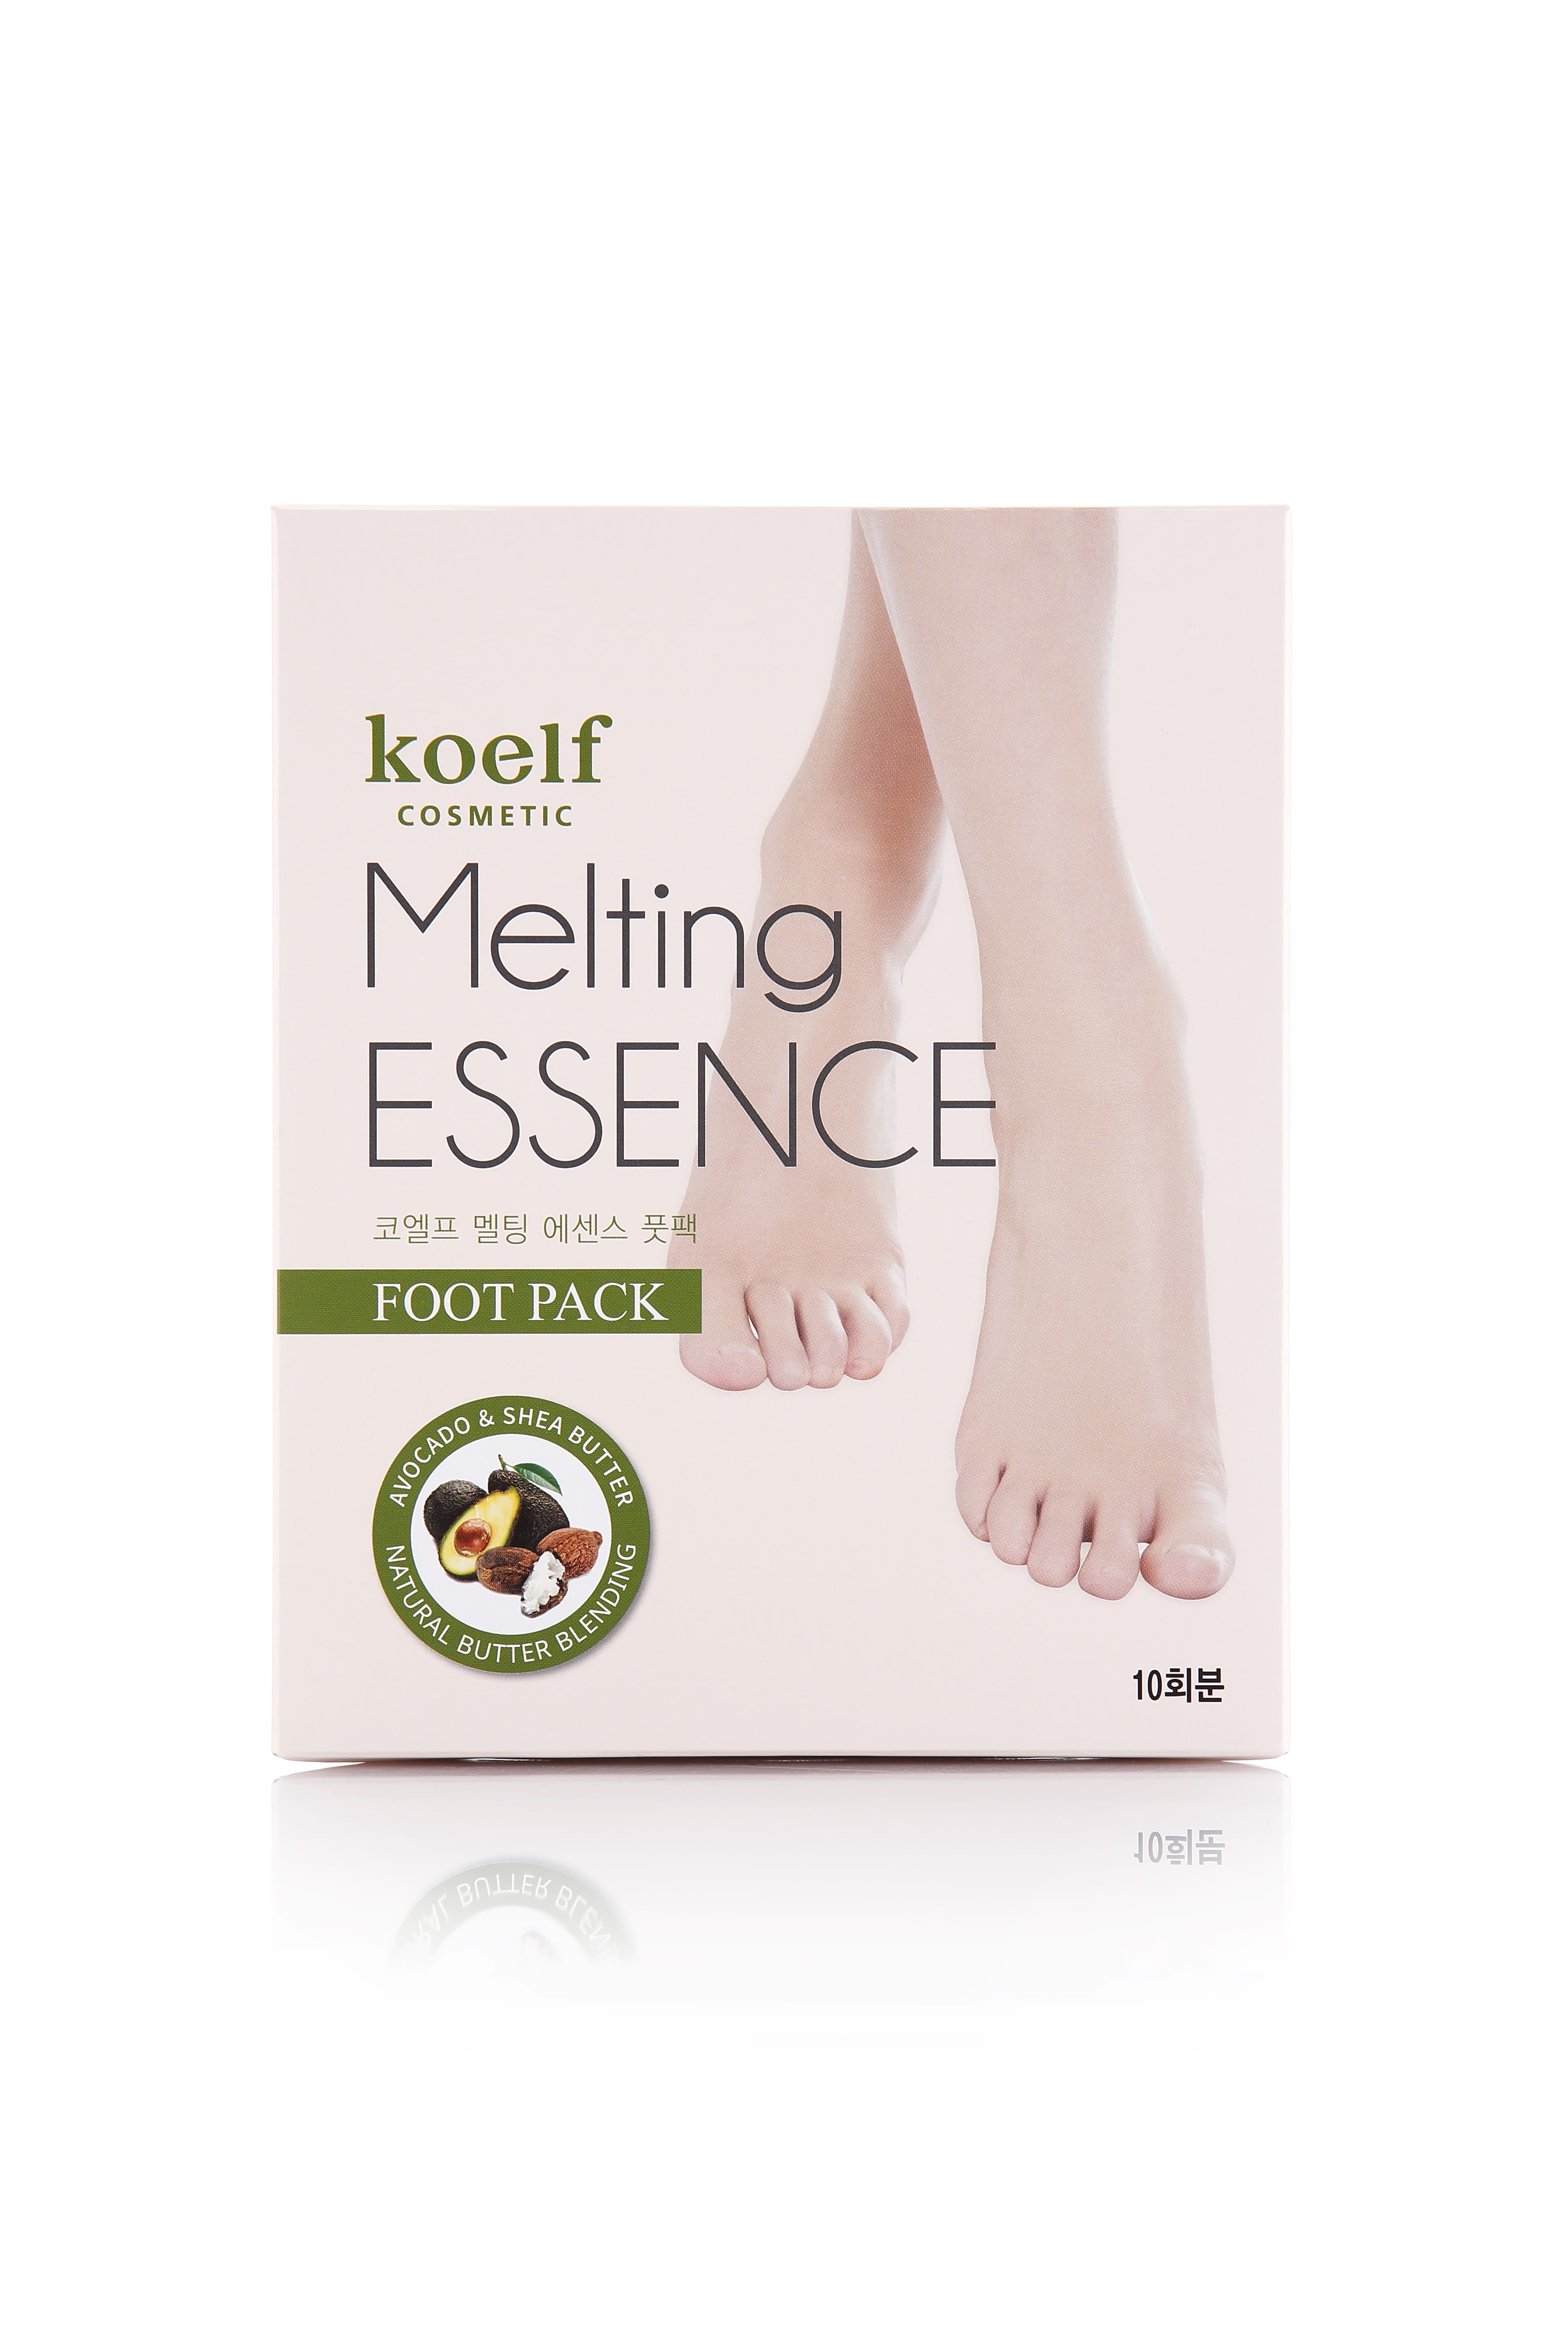 koelf Melting ESSENCE FOOT PACK